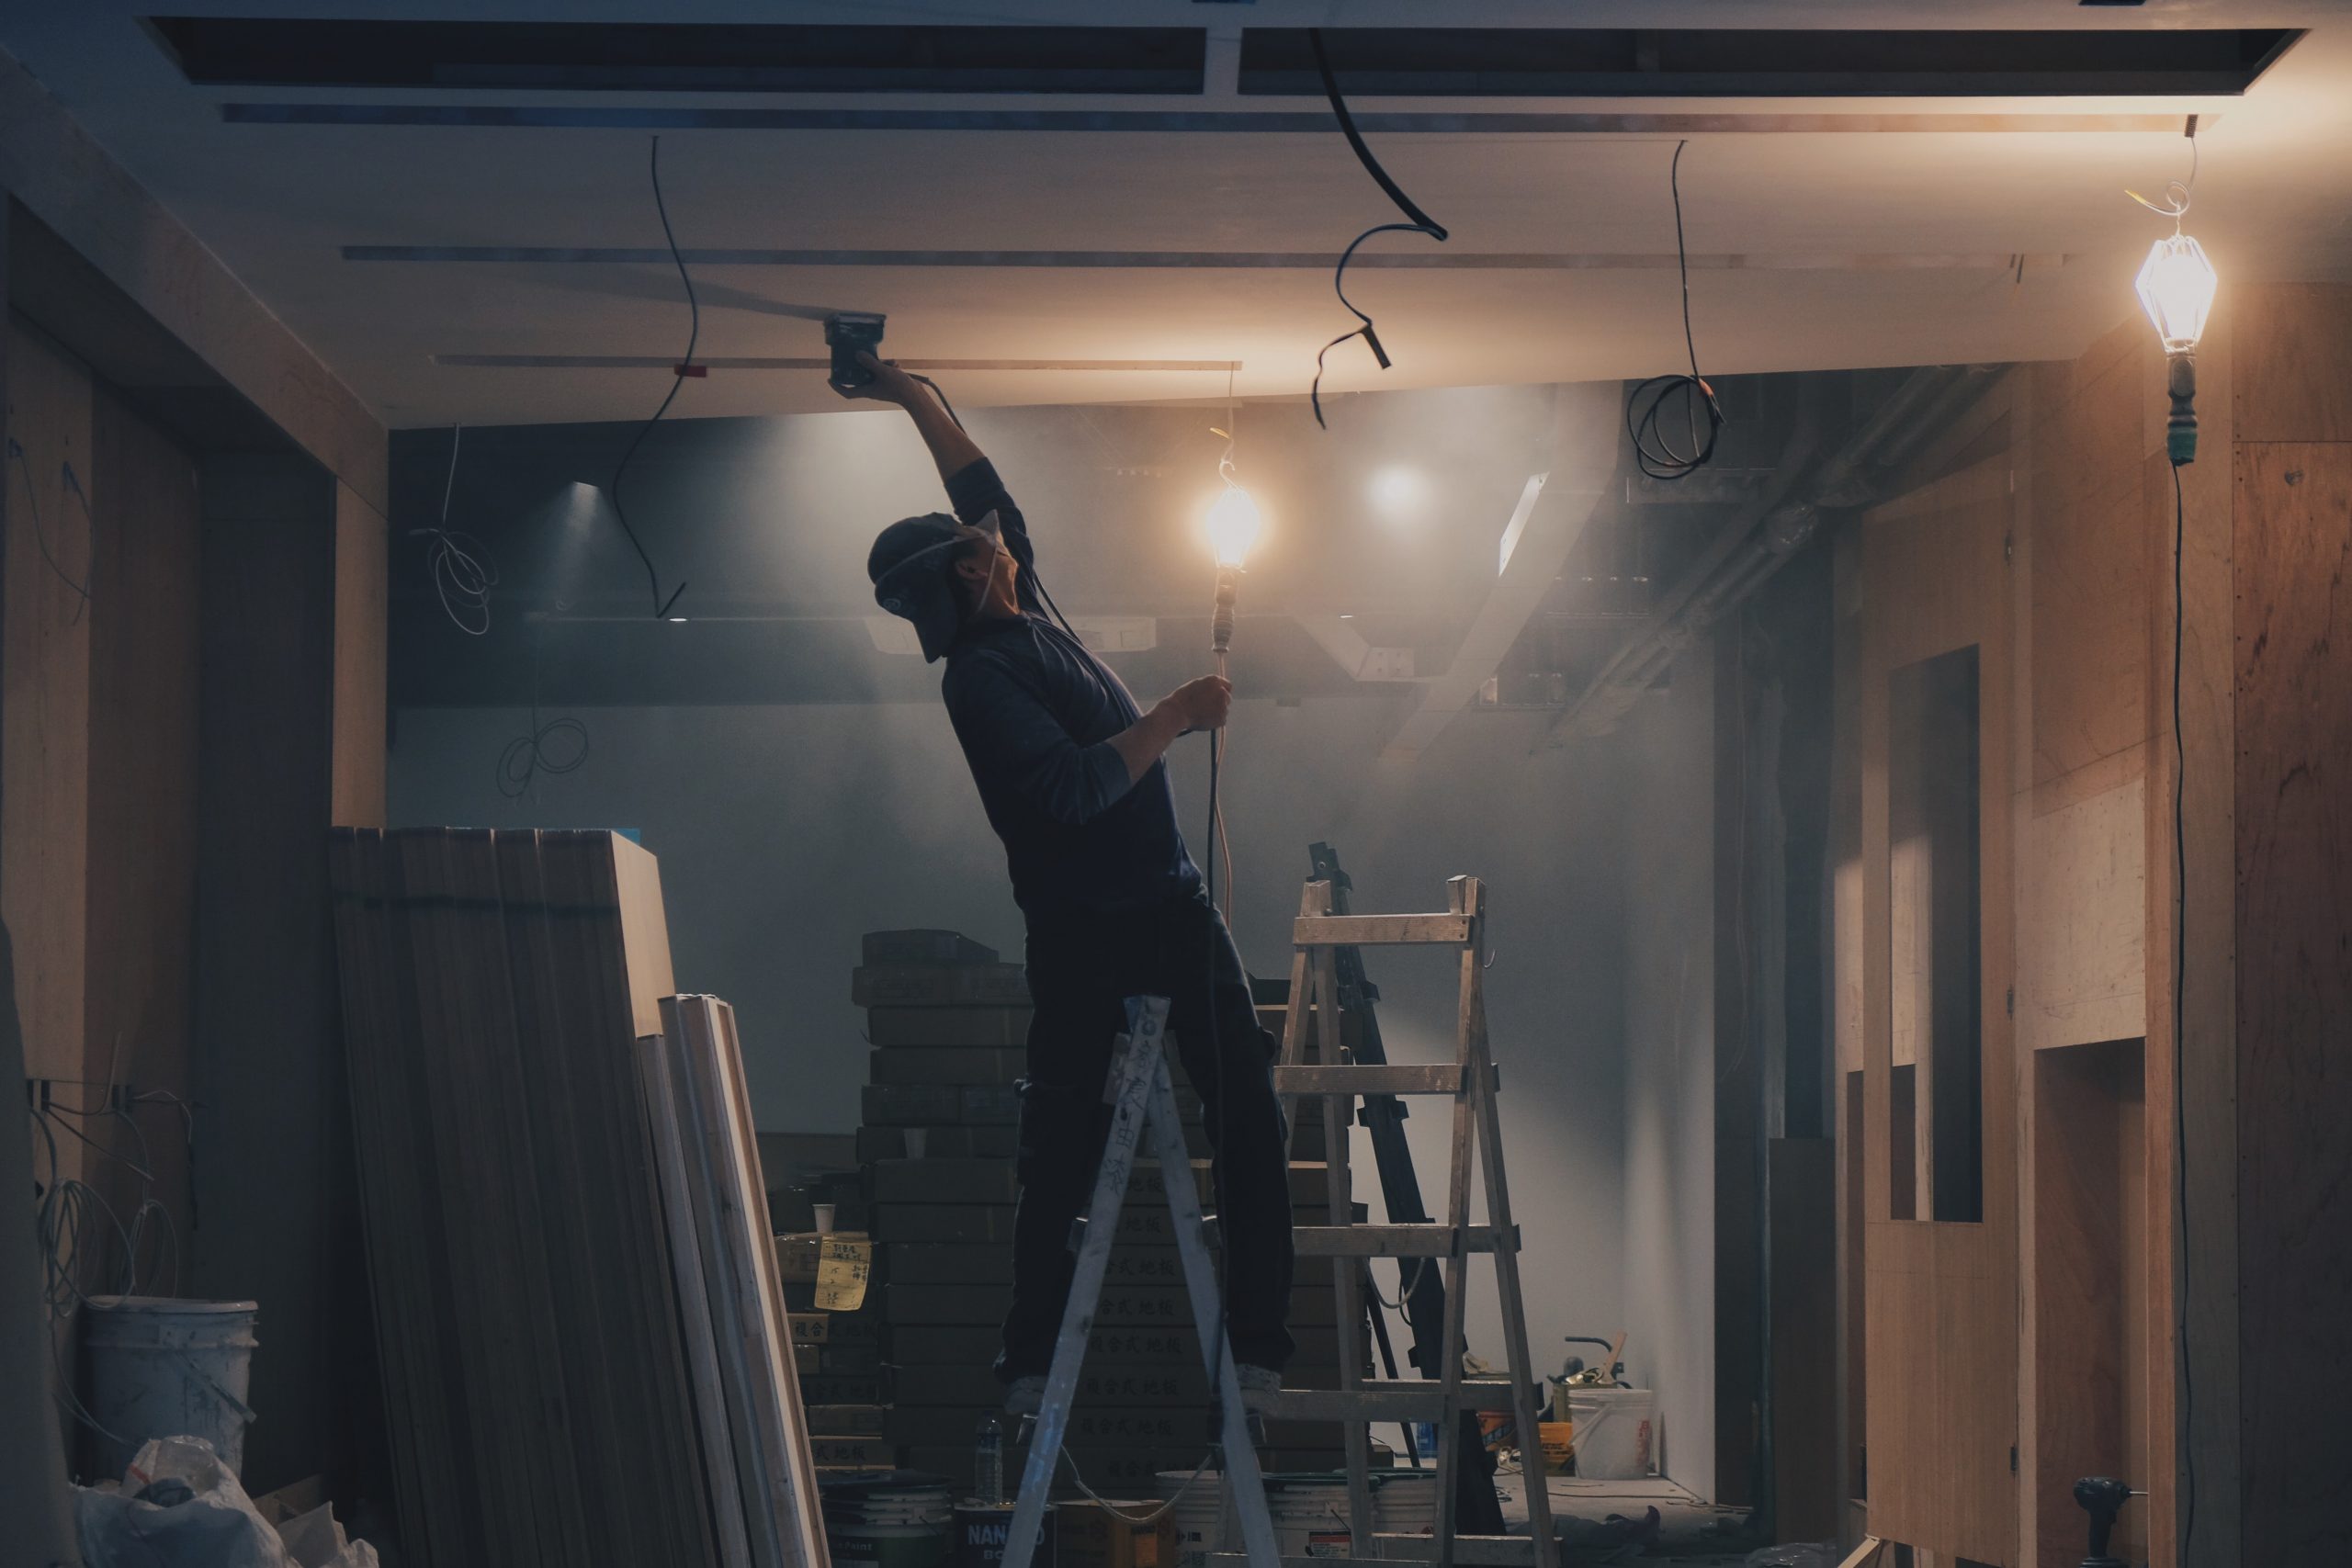 Man Straddling Ladder While Sanding Ceiling In Dark Dusty Room